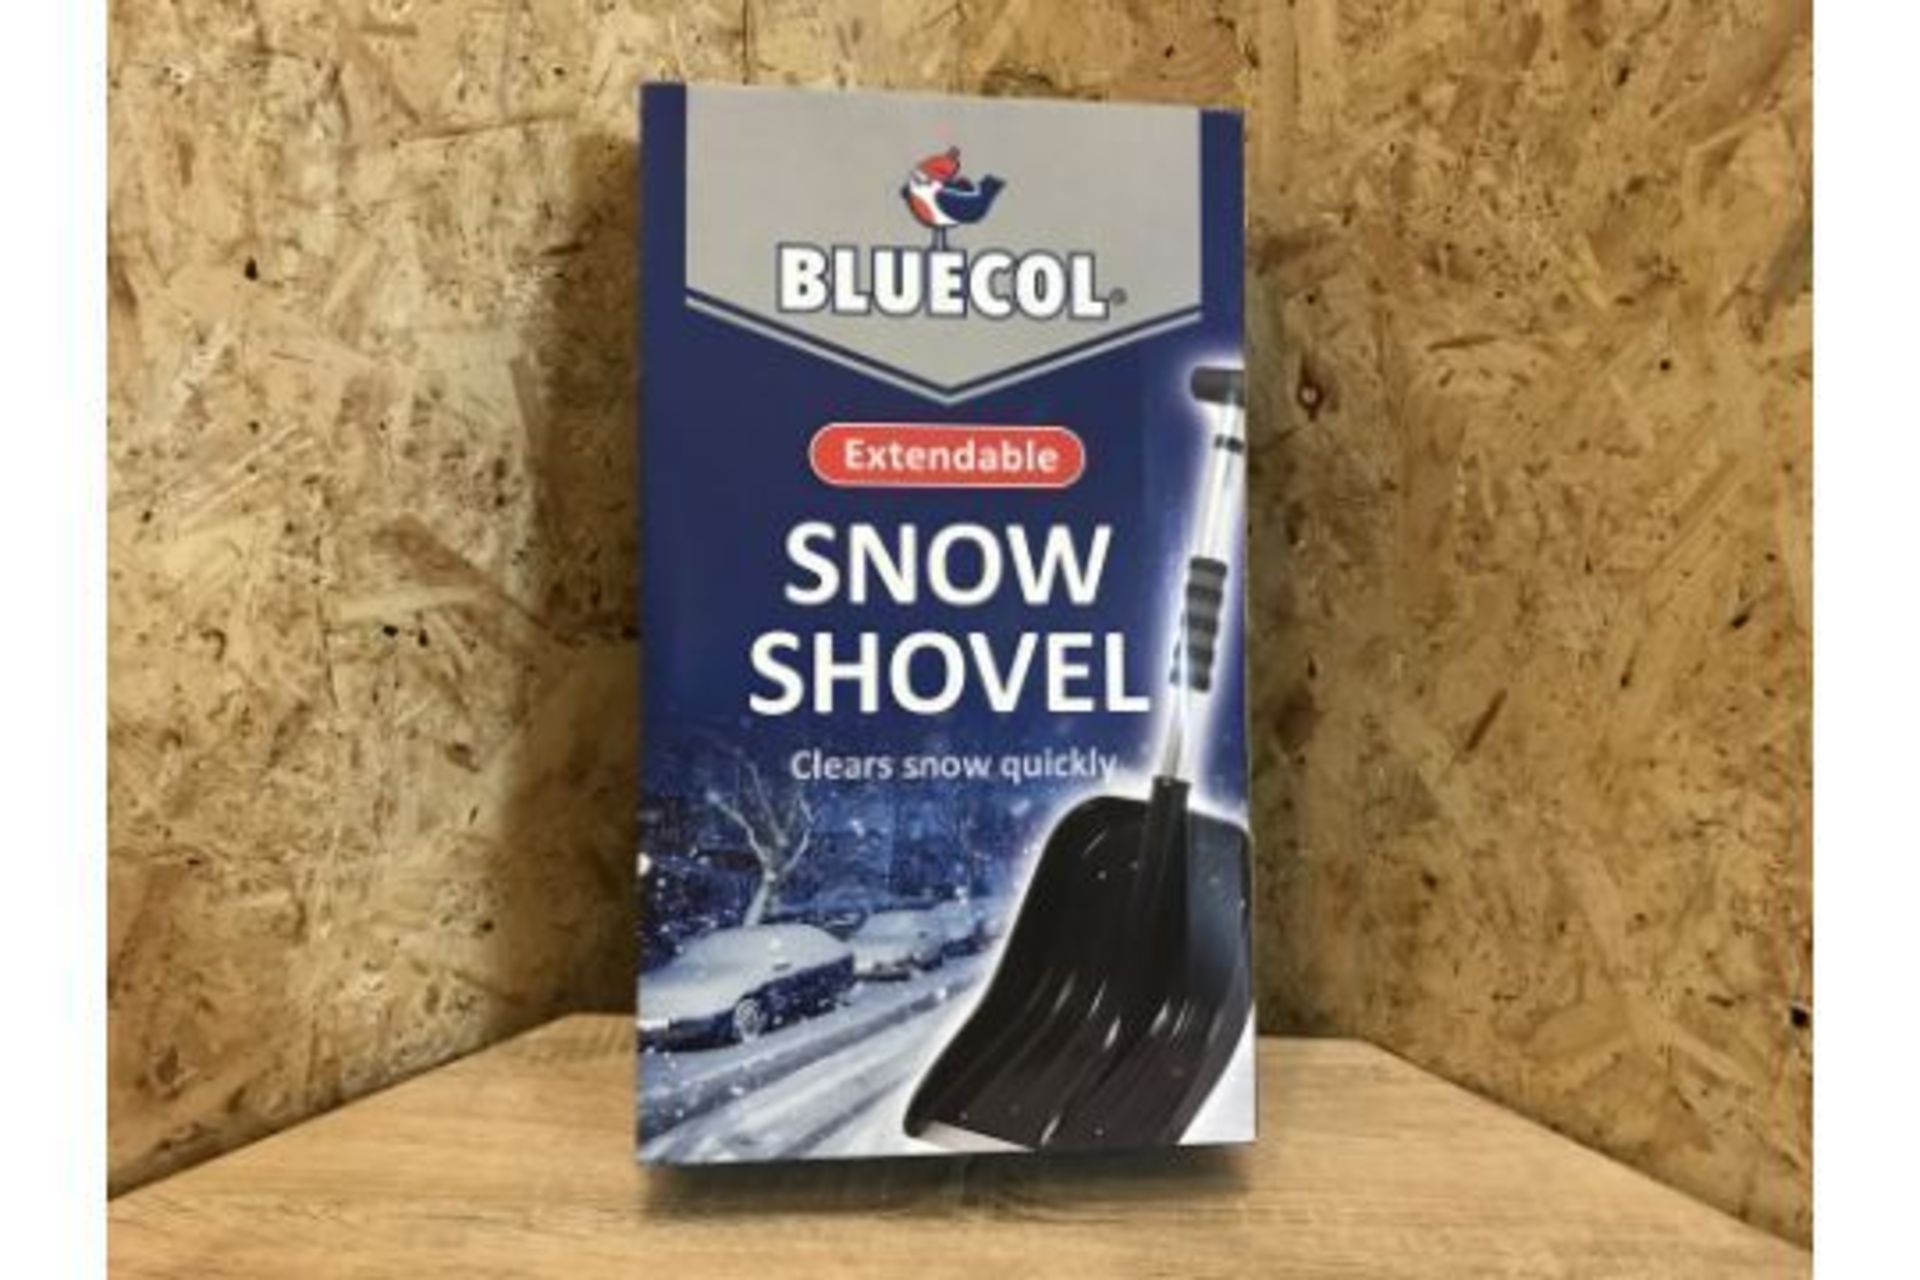 24 X NEW BLUECOL EXTENDABLE SNOW SHOVELS